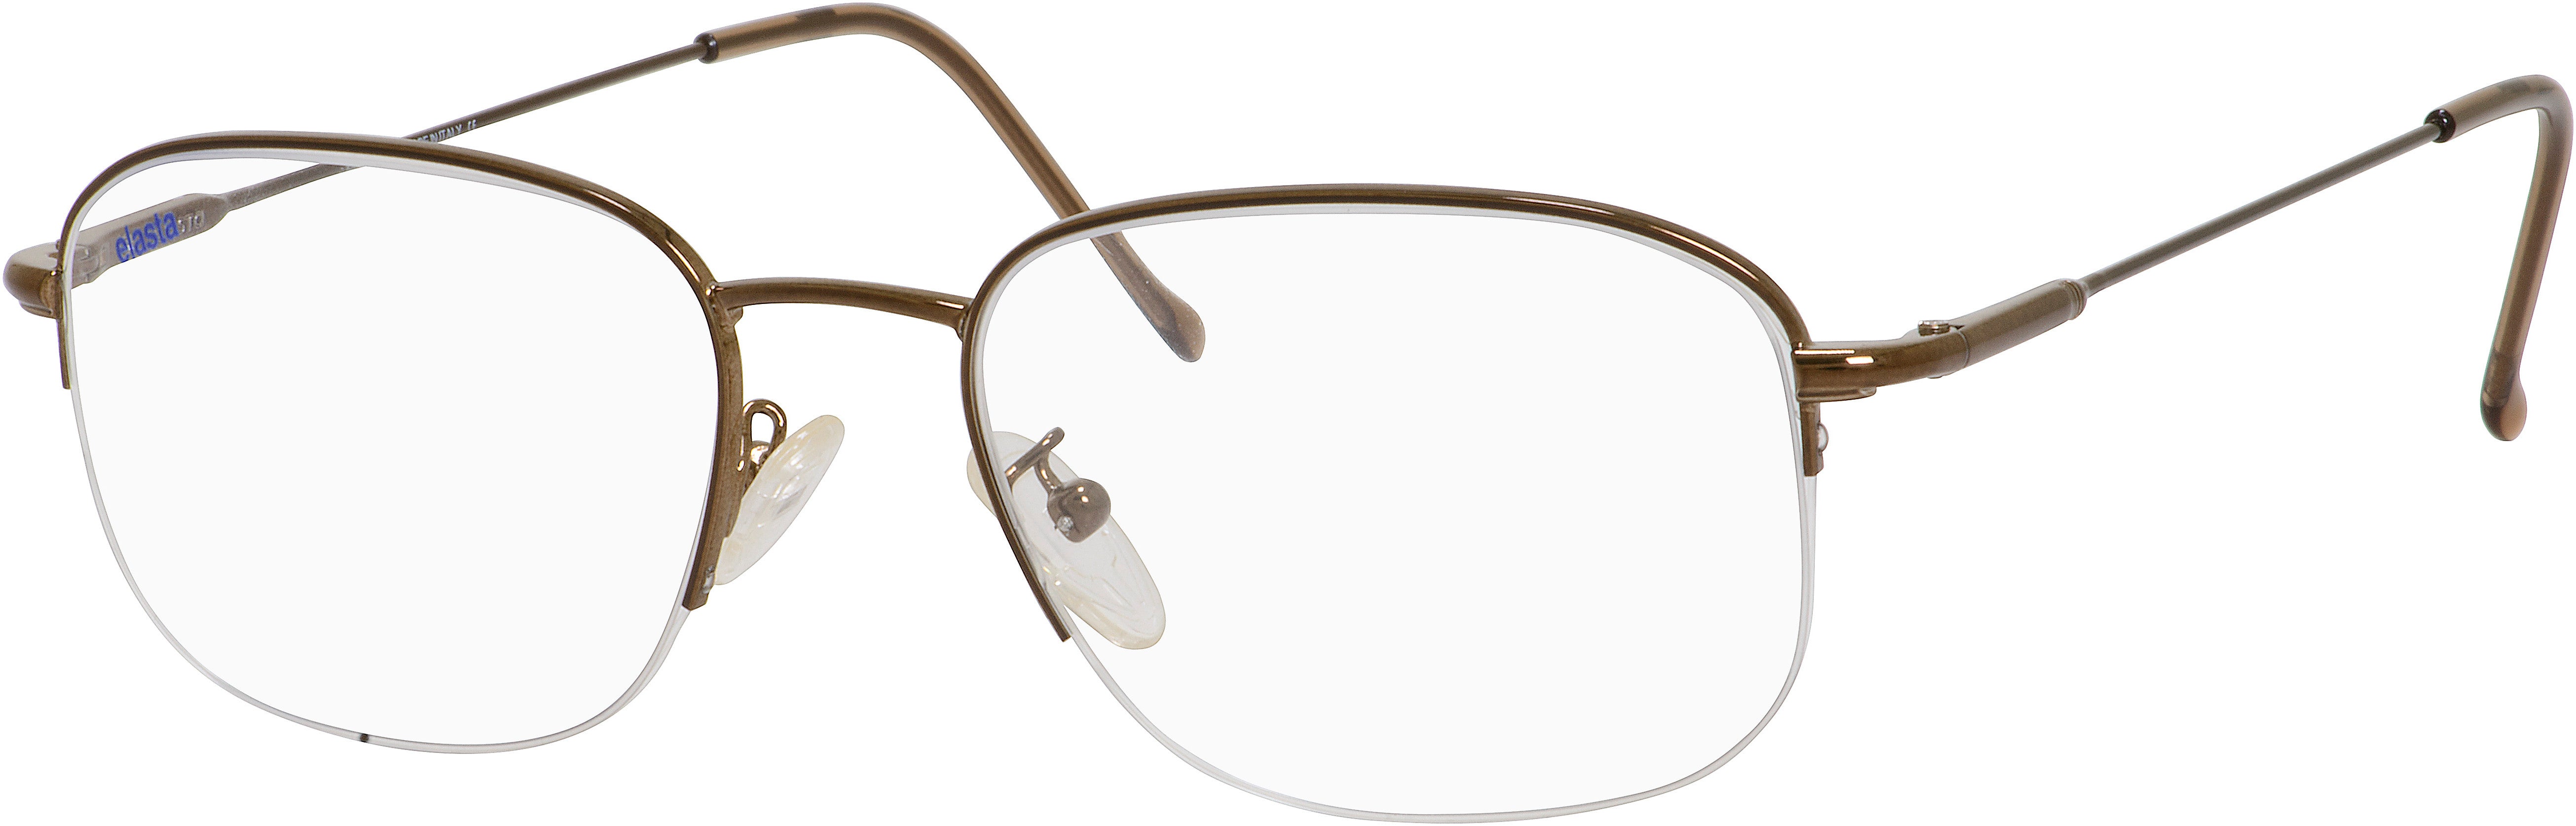  Elasta 7033 Rectangular Eyeglasses 0W3M-0W3M  Brown (00 Demo Lens)